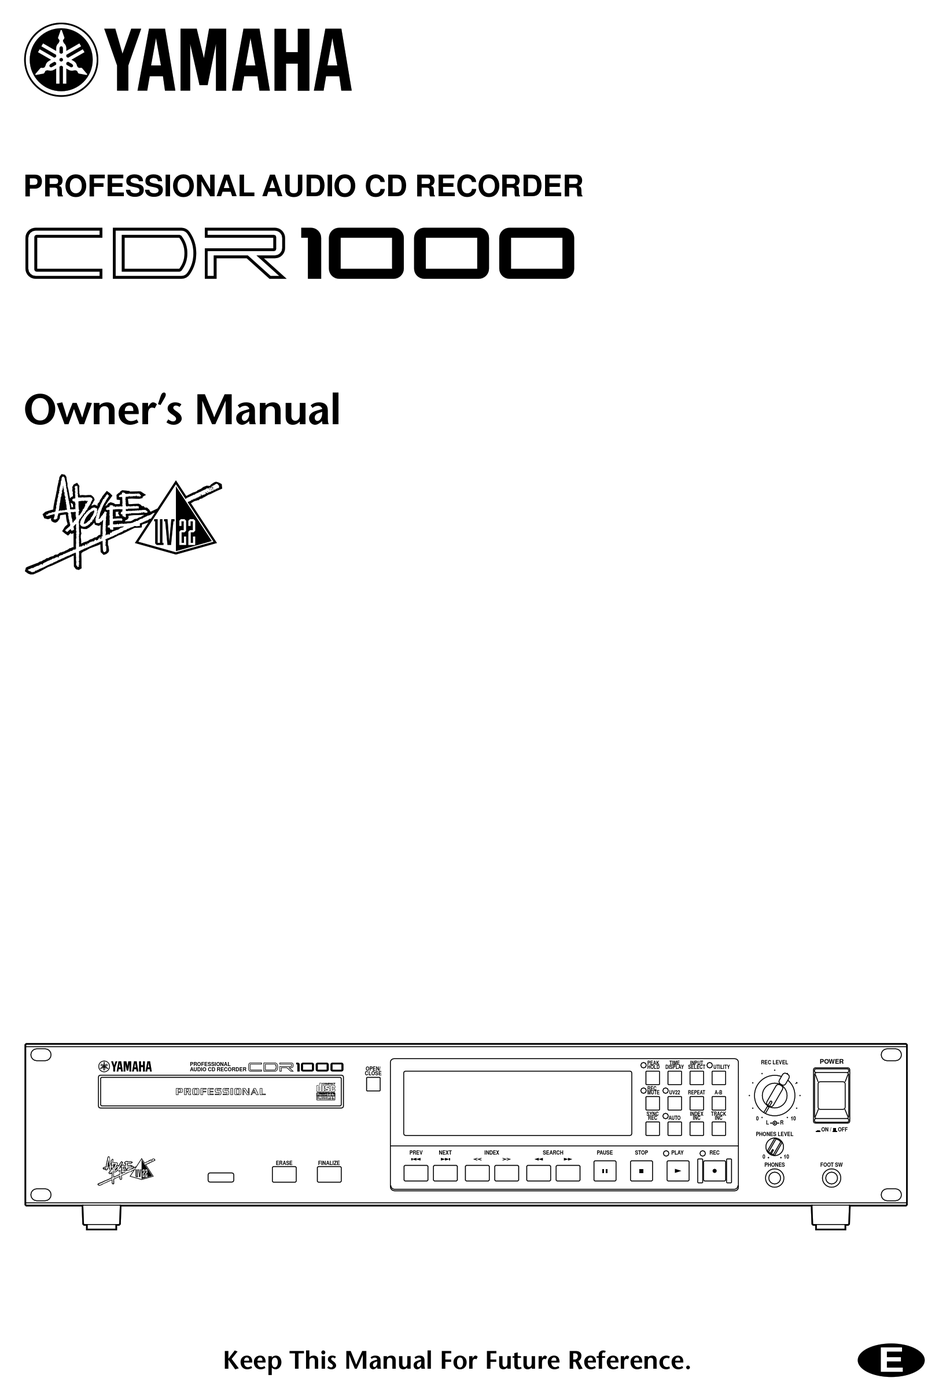 YAMAHA CDR1000 OWNER'S MANUAL Pdf Download | ManualsLib